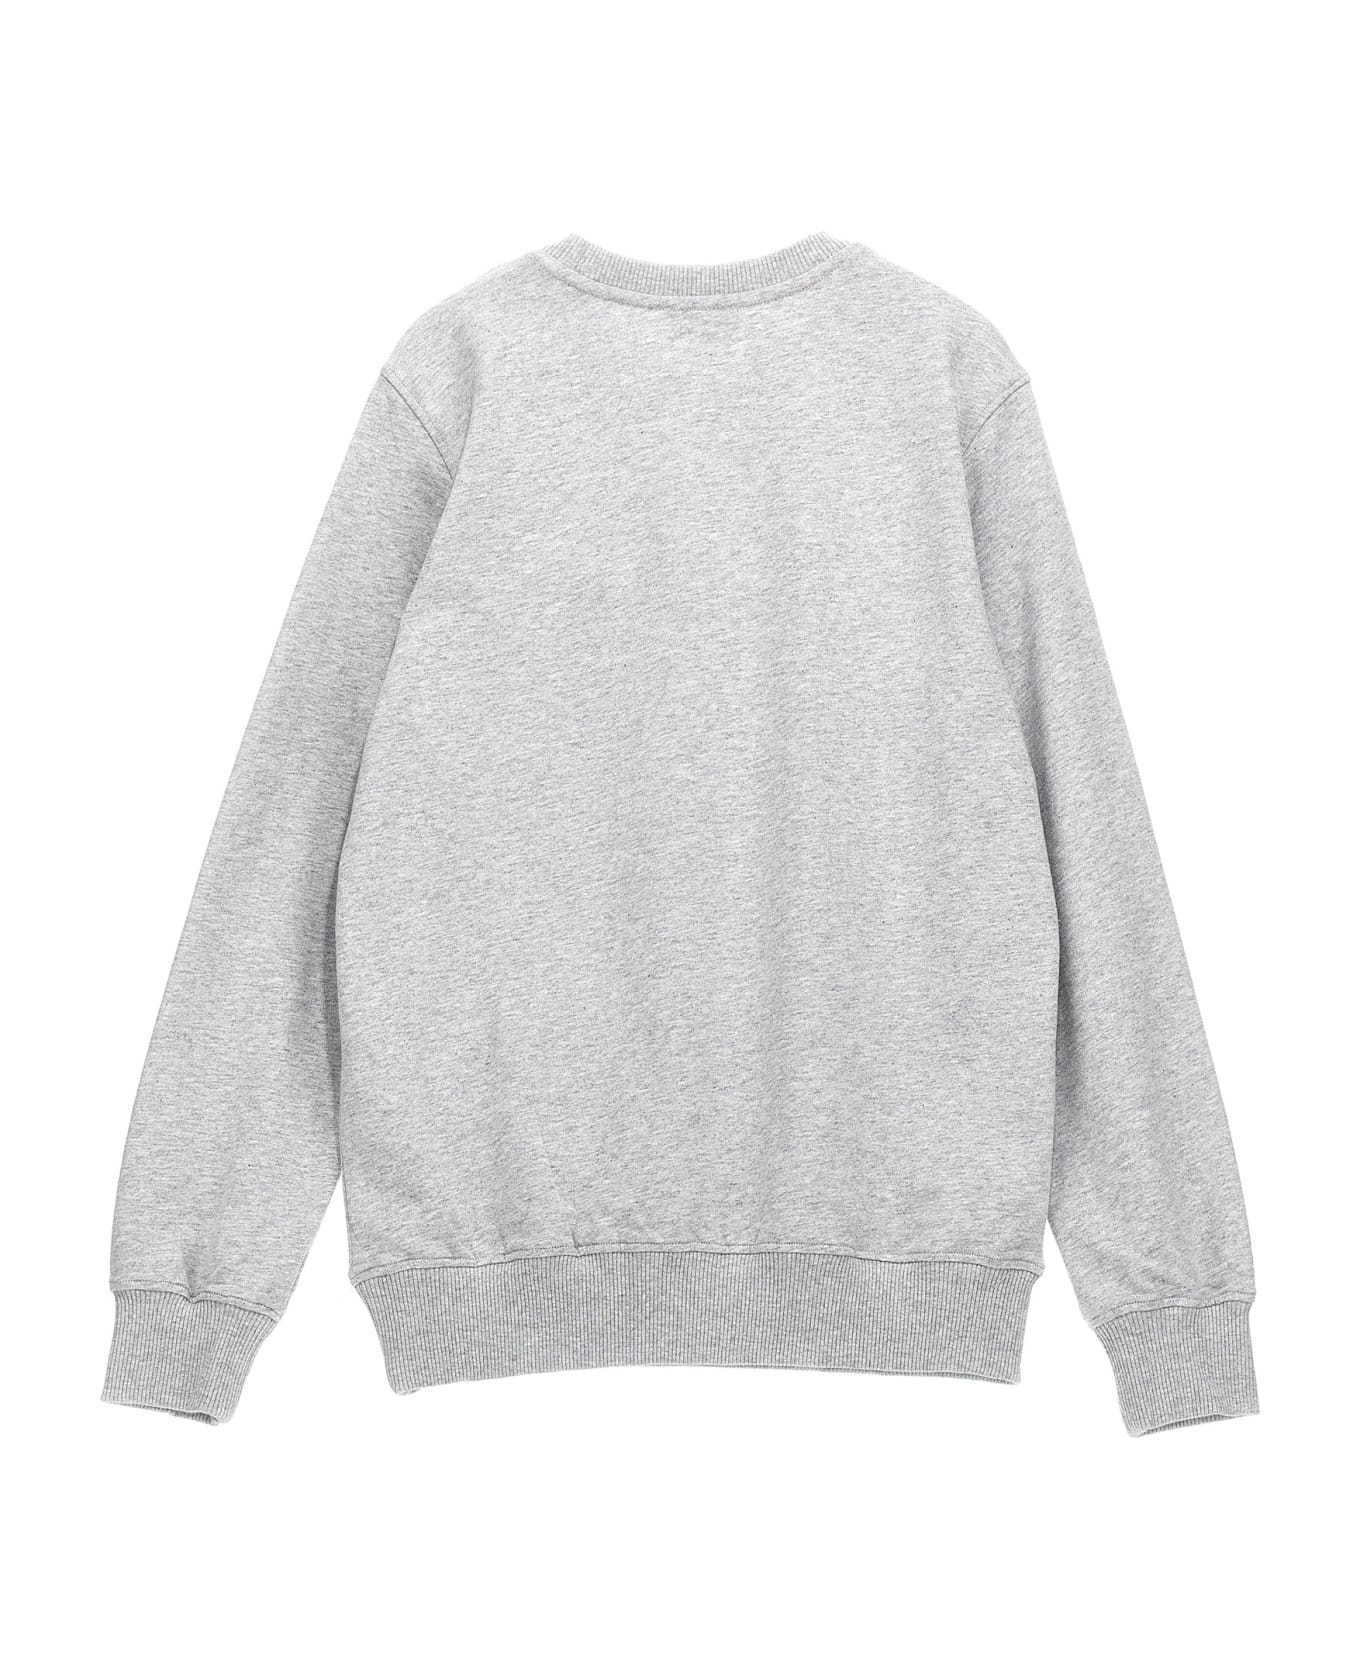 Moschino Logo Print Sweatshirt - Gray ニットウェア＆スウェットシャツ